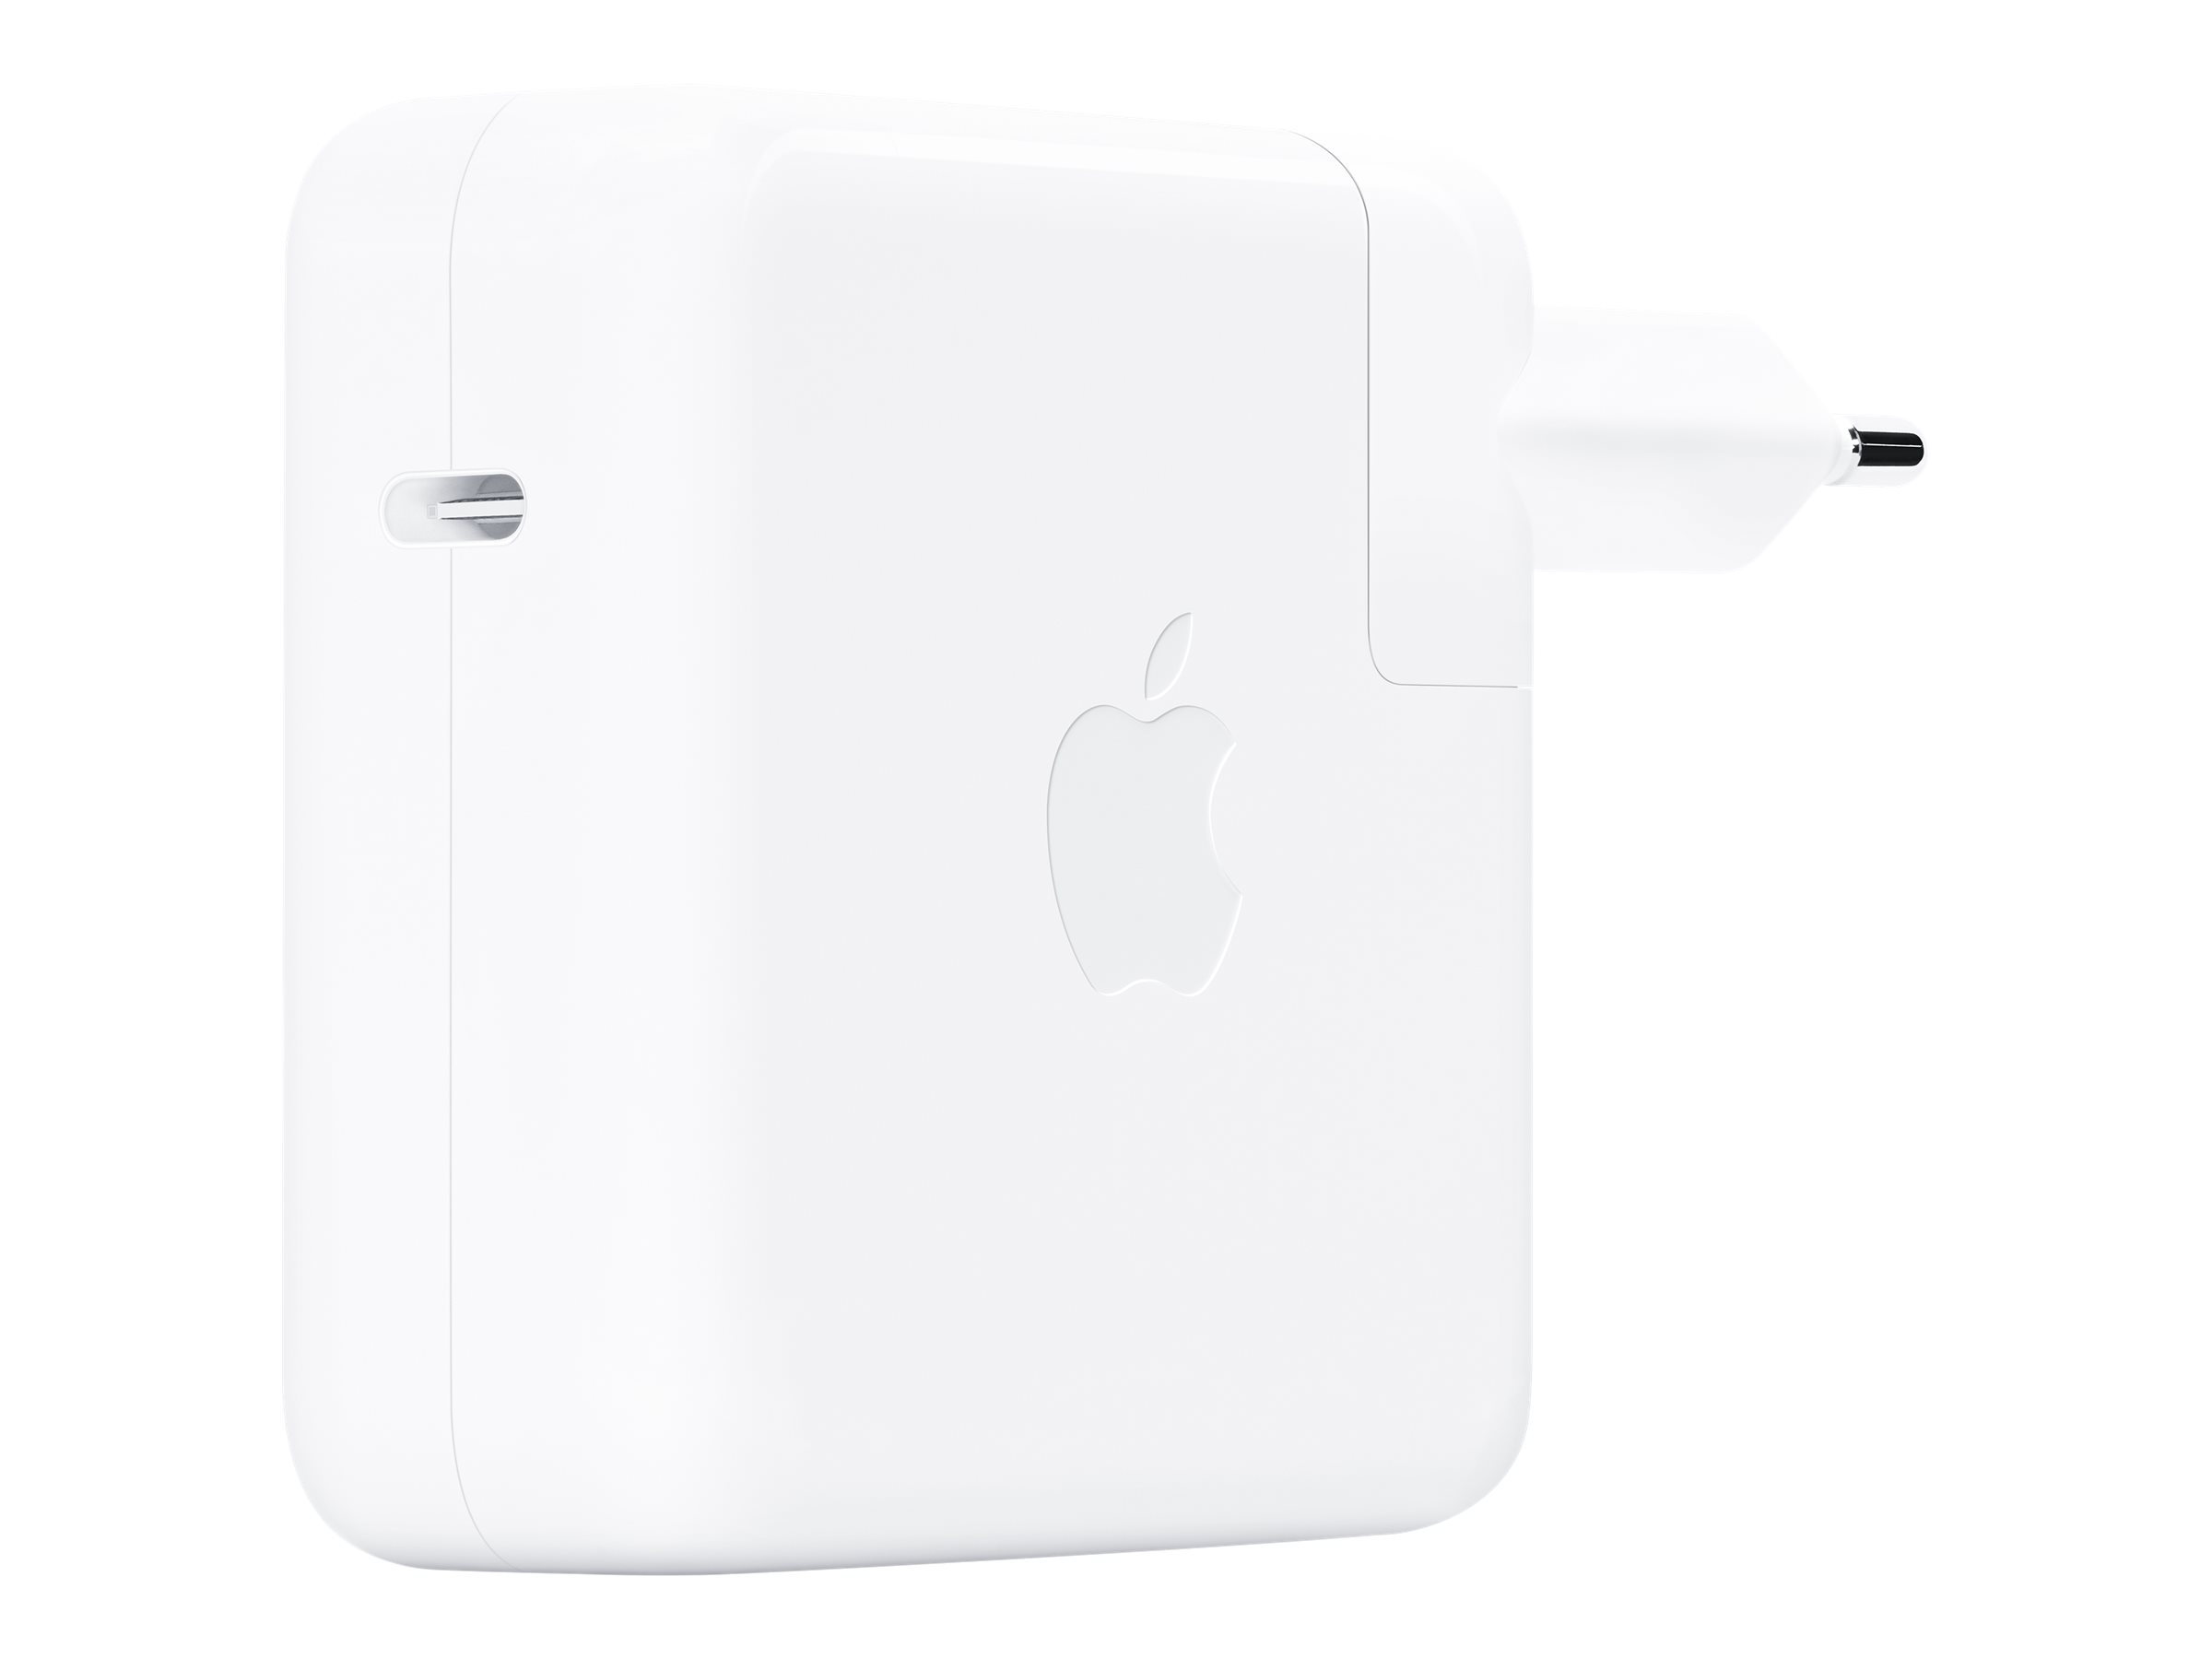 macbook air usb c wattage